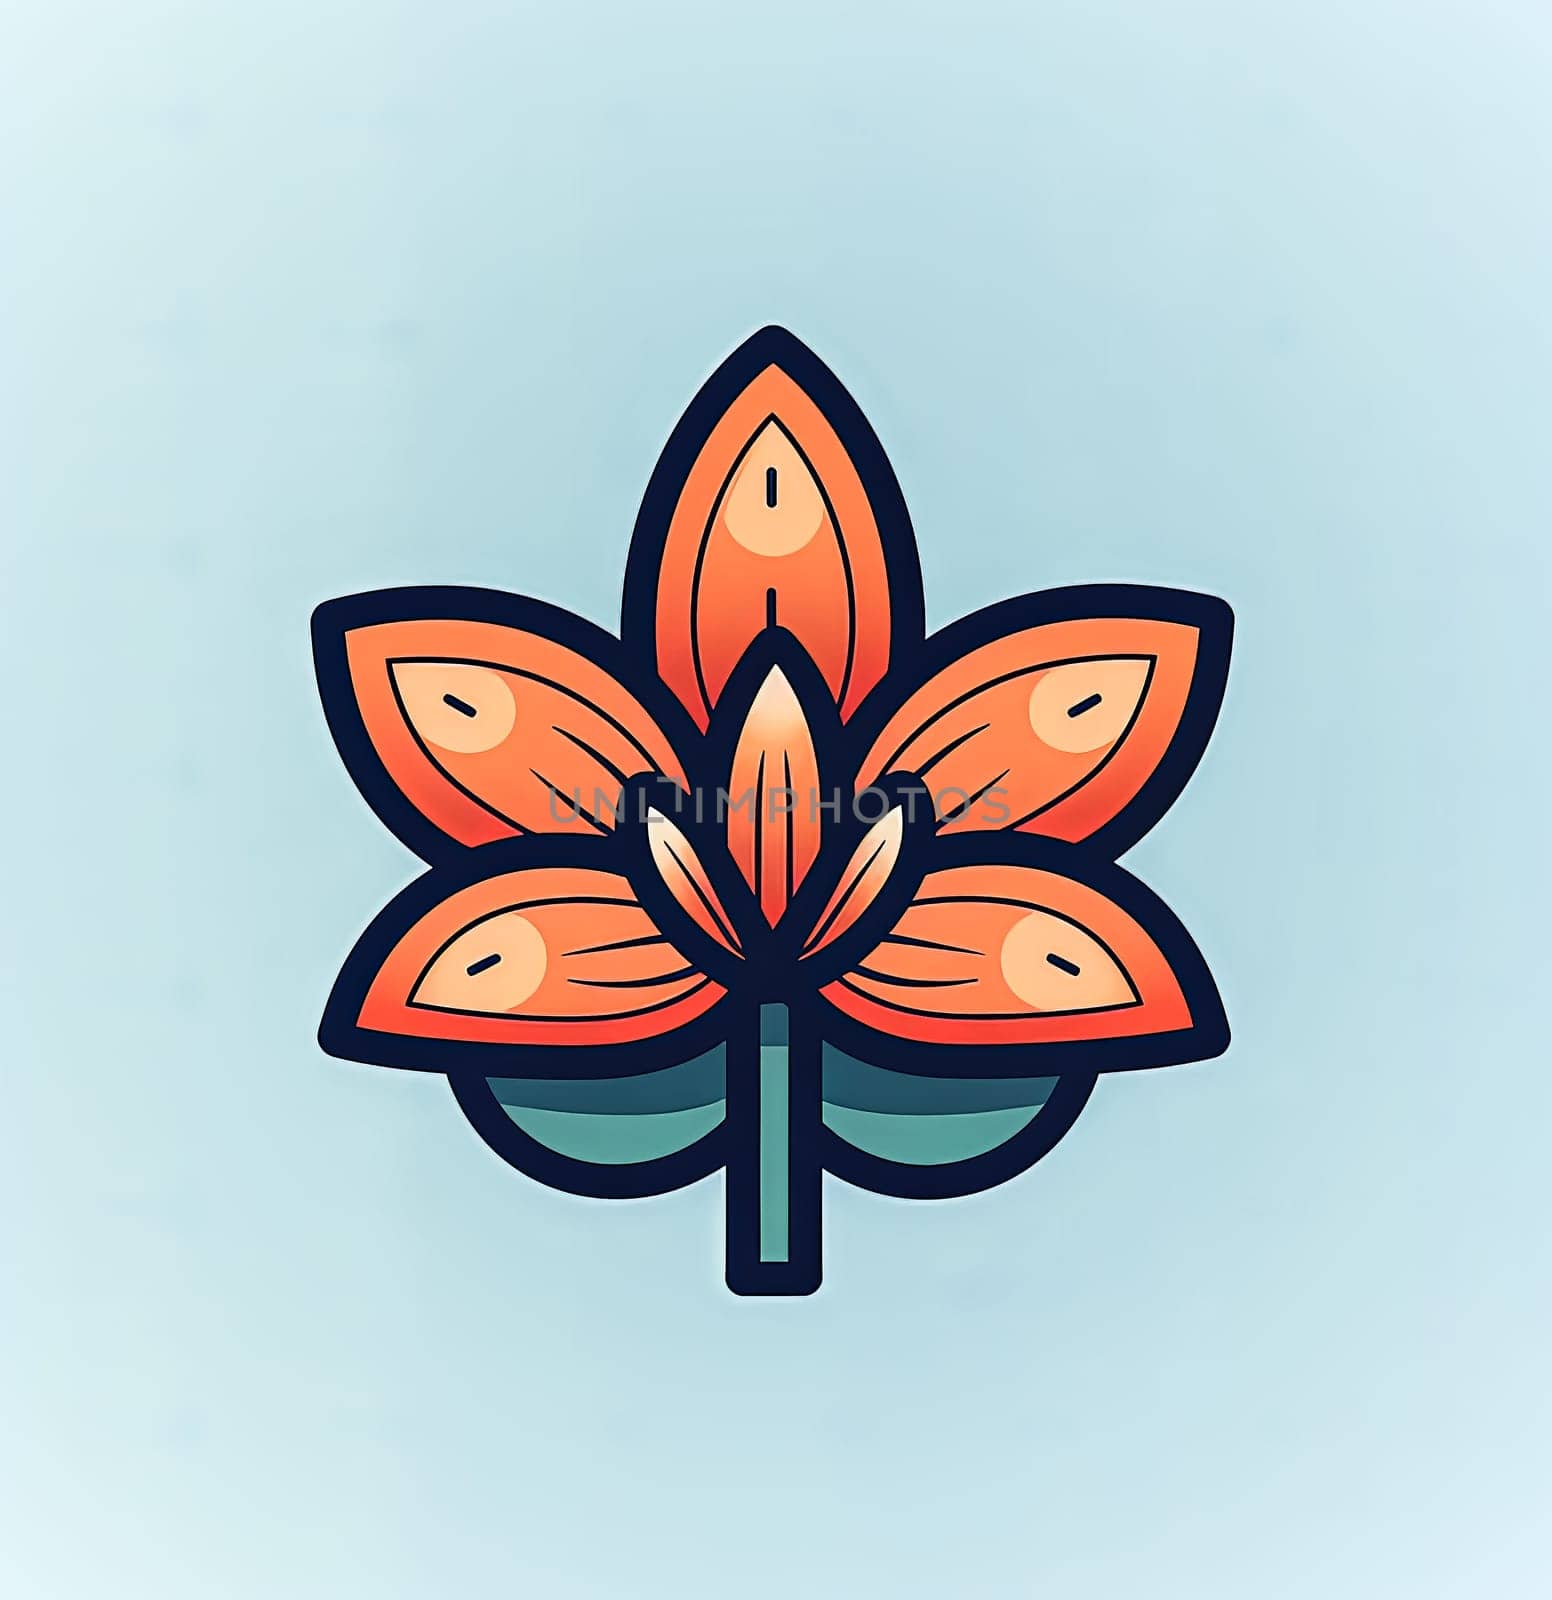 Simple and elegant flower icon by Alla_Morozova93